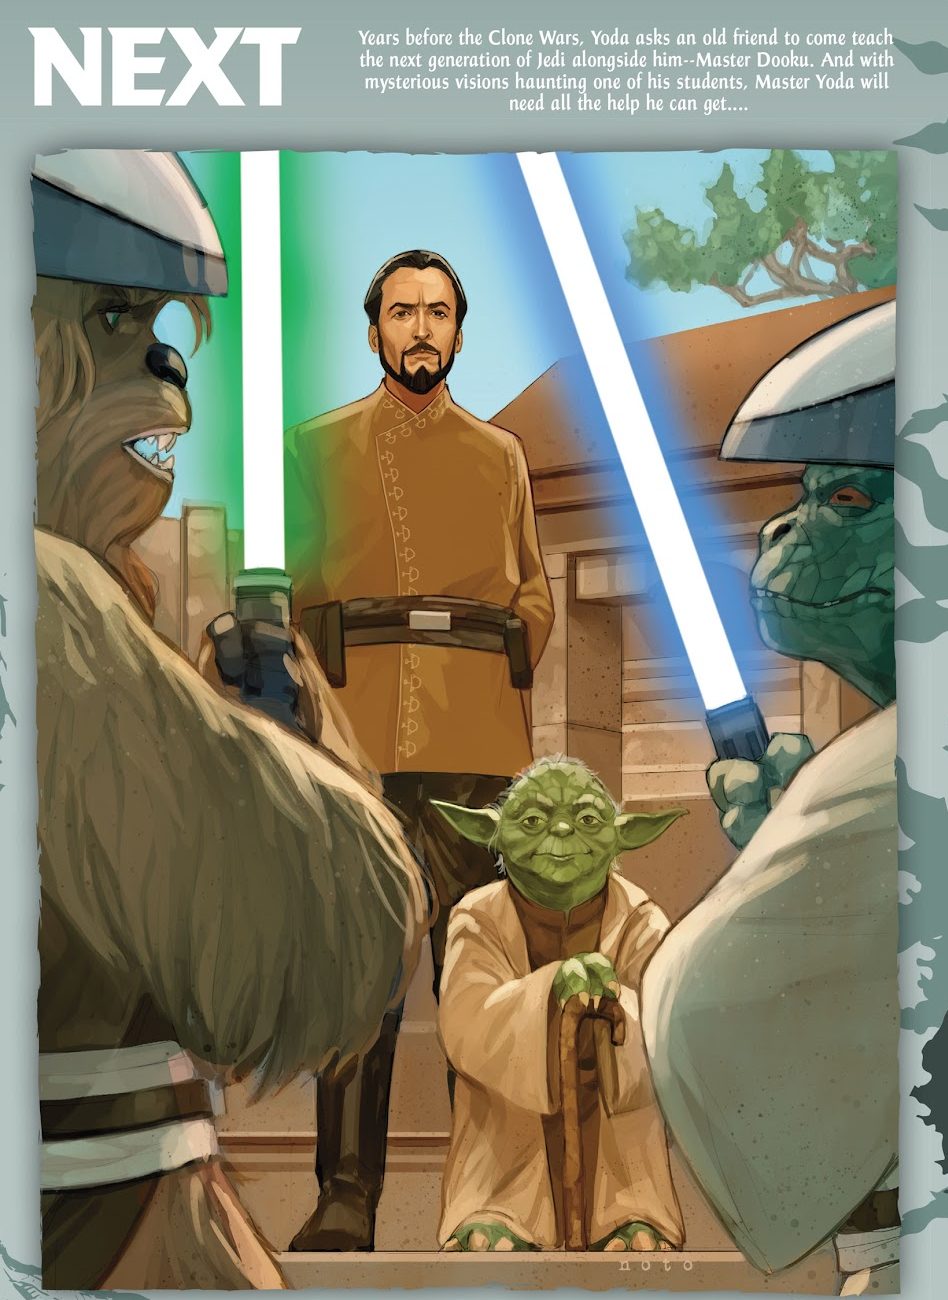 Yoda-le-hee-hoo: Disney Infinity 3.0 Star Wars review